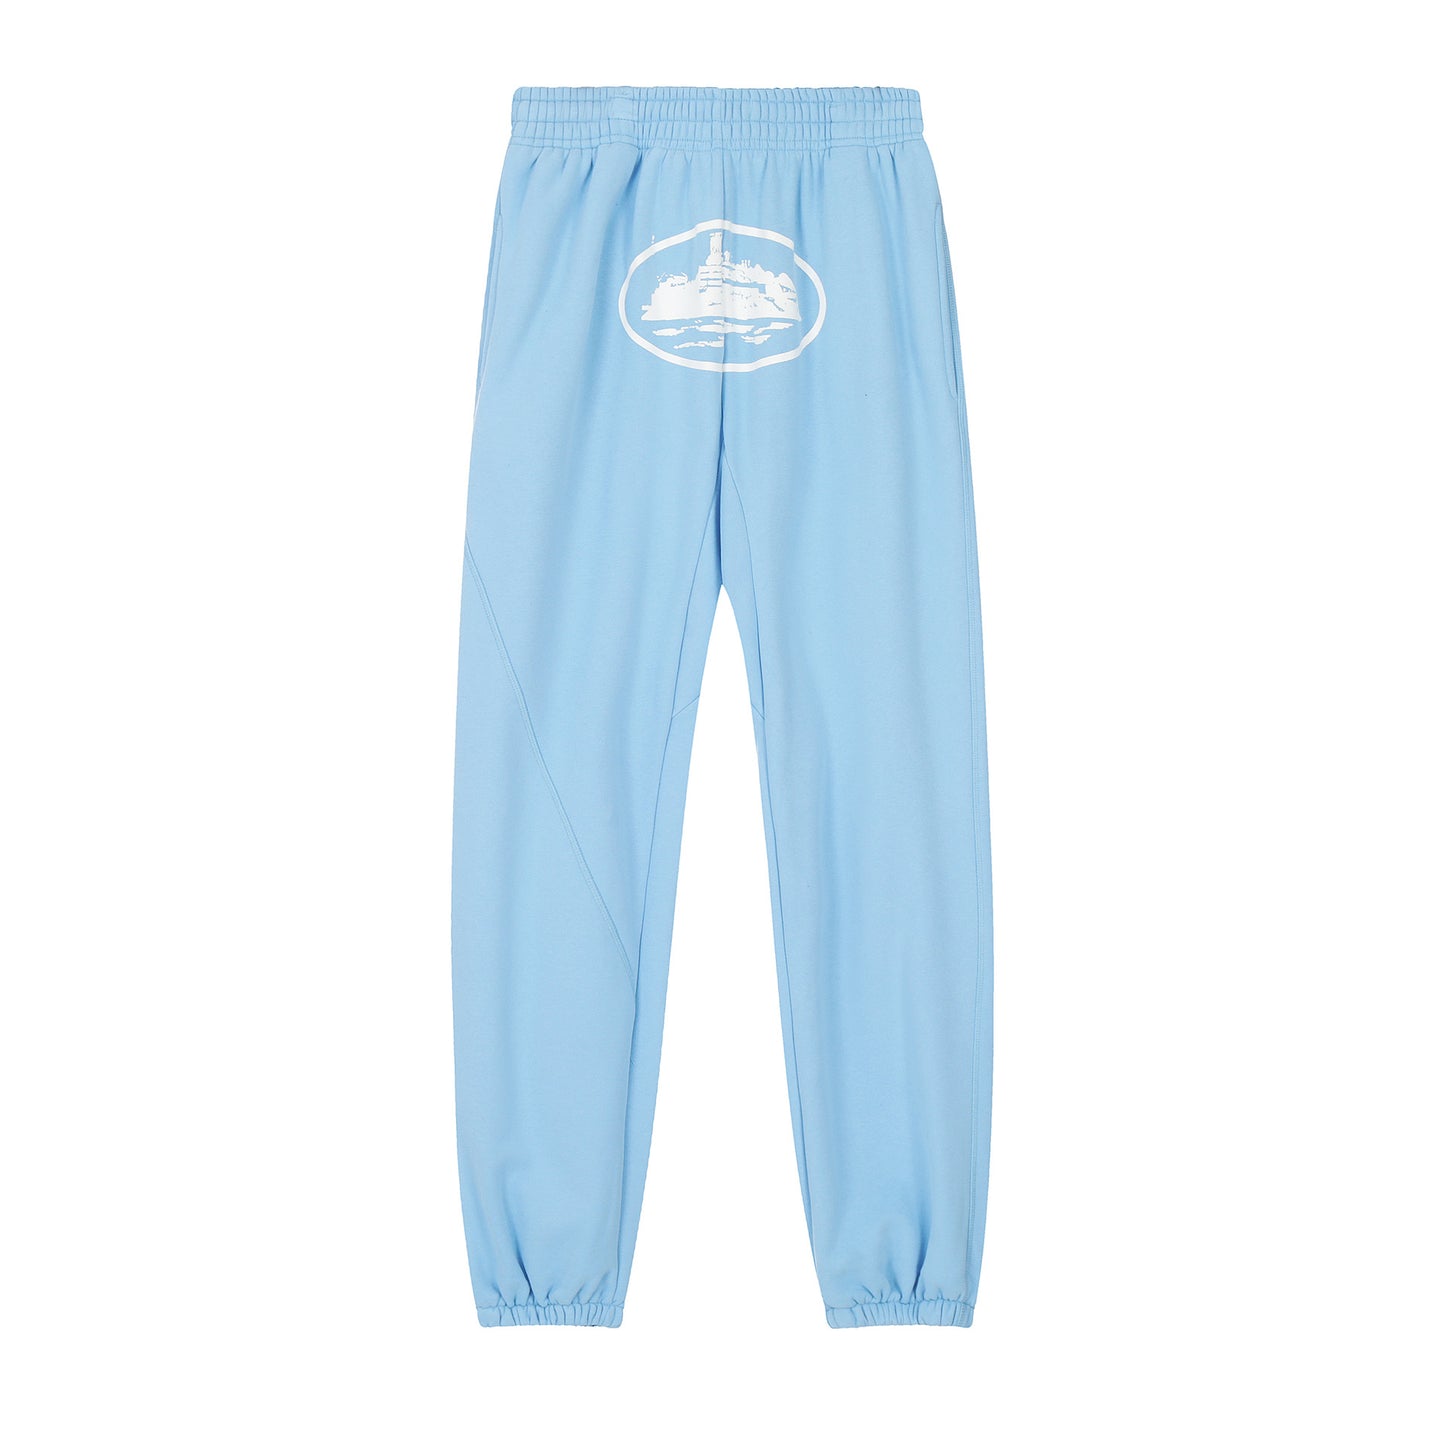 Corteiz Alcatraz Jogging Trousers - BABY BLUE